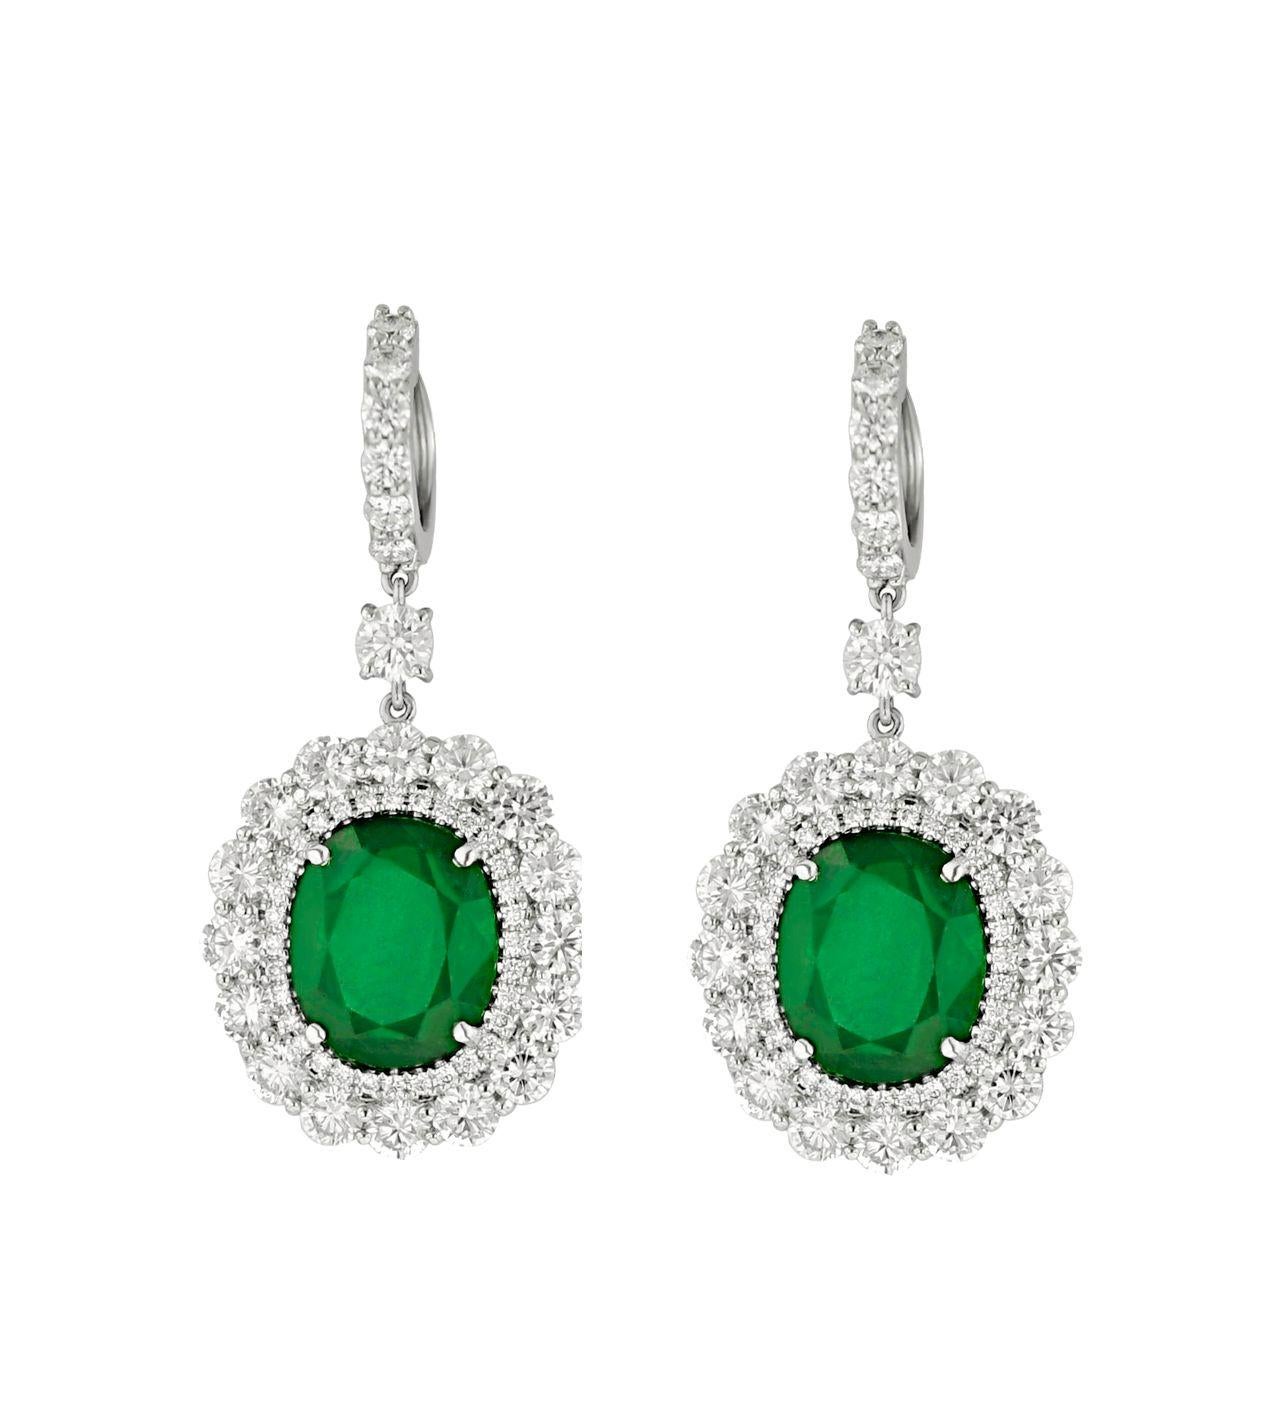 Oval Cut Diana M 9.21cts Oval Shaped Emerald & 6.00cts Diamond Halo Drop Earrings For Sale